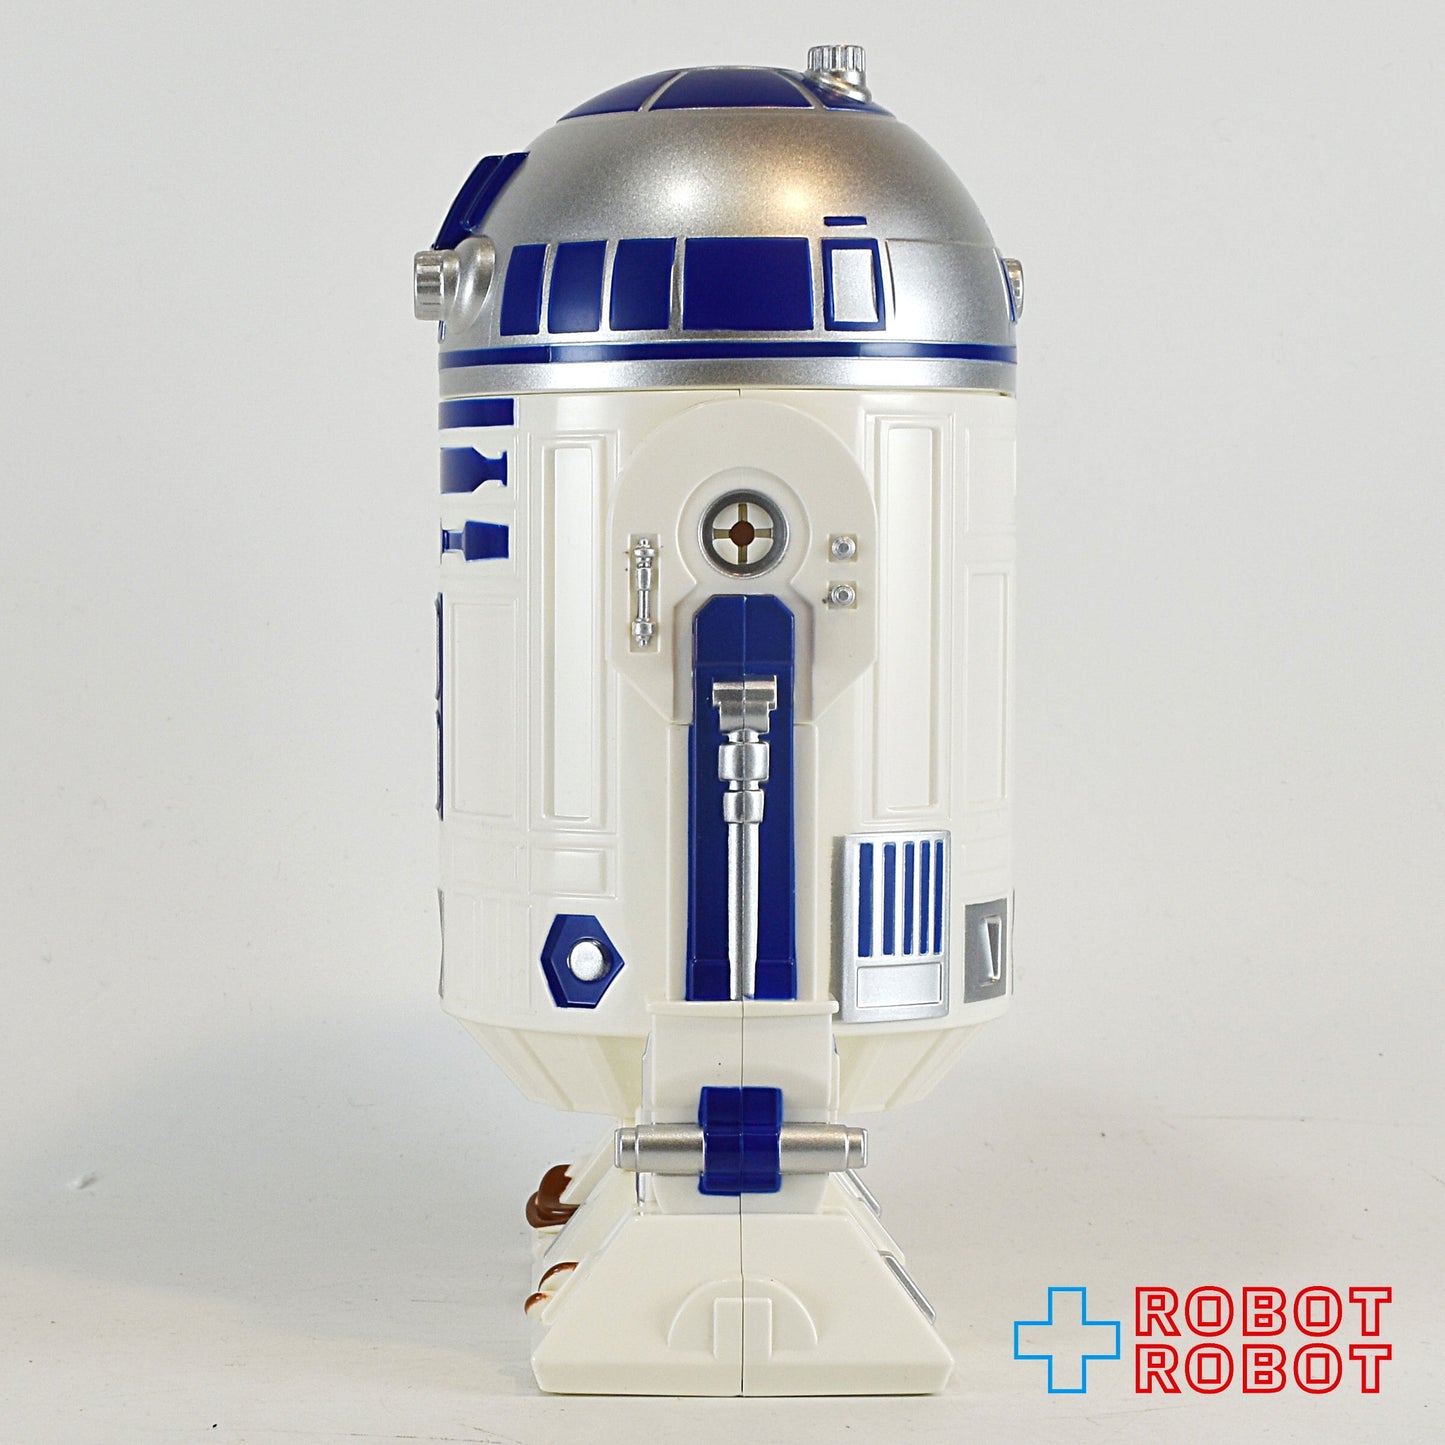 TDL ディズニーランド スターウォーズ R2-D2 キャンディケース 開封